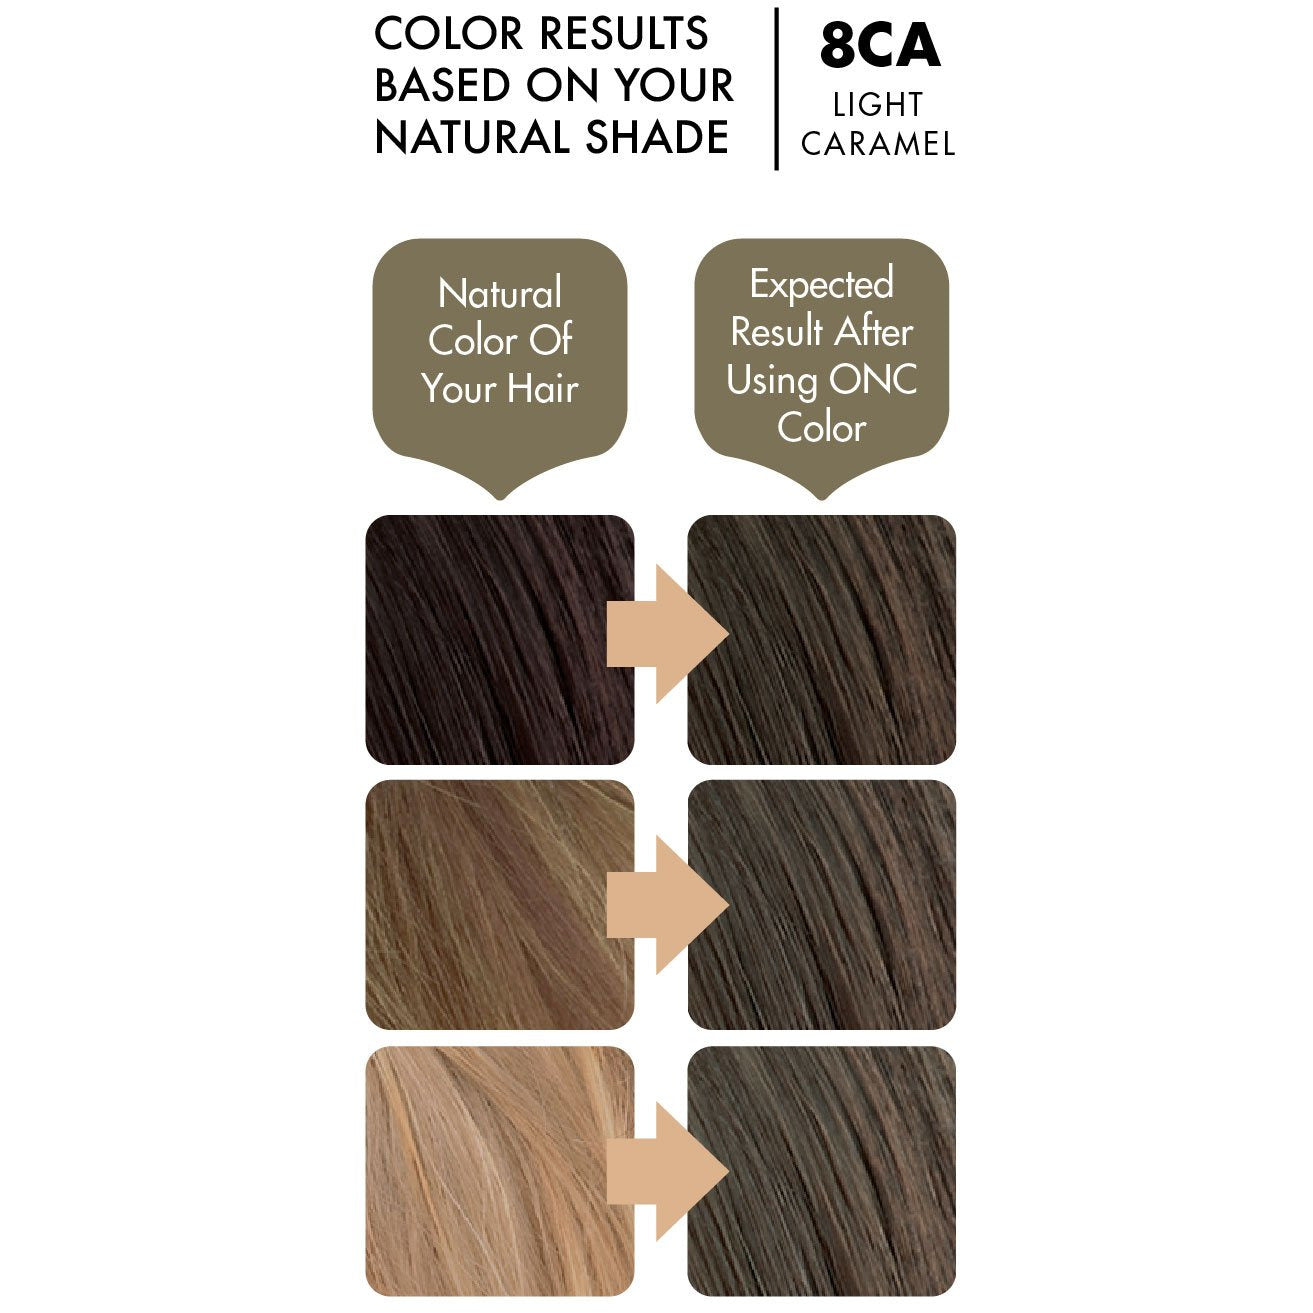 caramel brown hair color chart